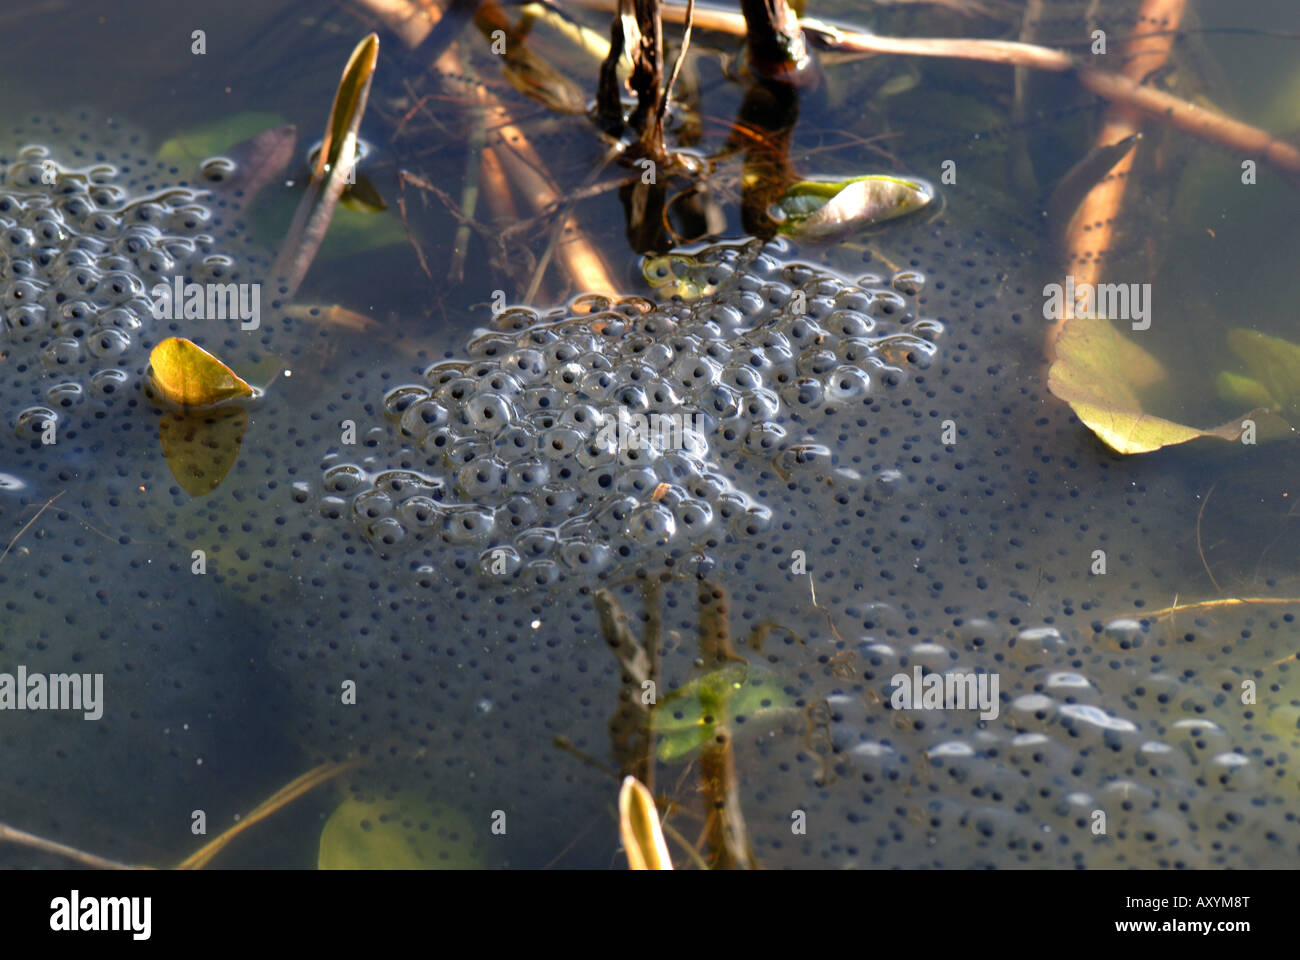 European frog Rana temporaria frogspawn mass in garden pond Stock Photo